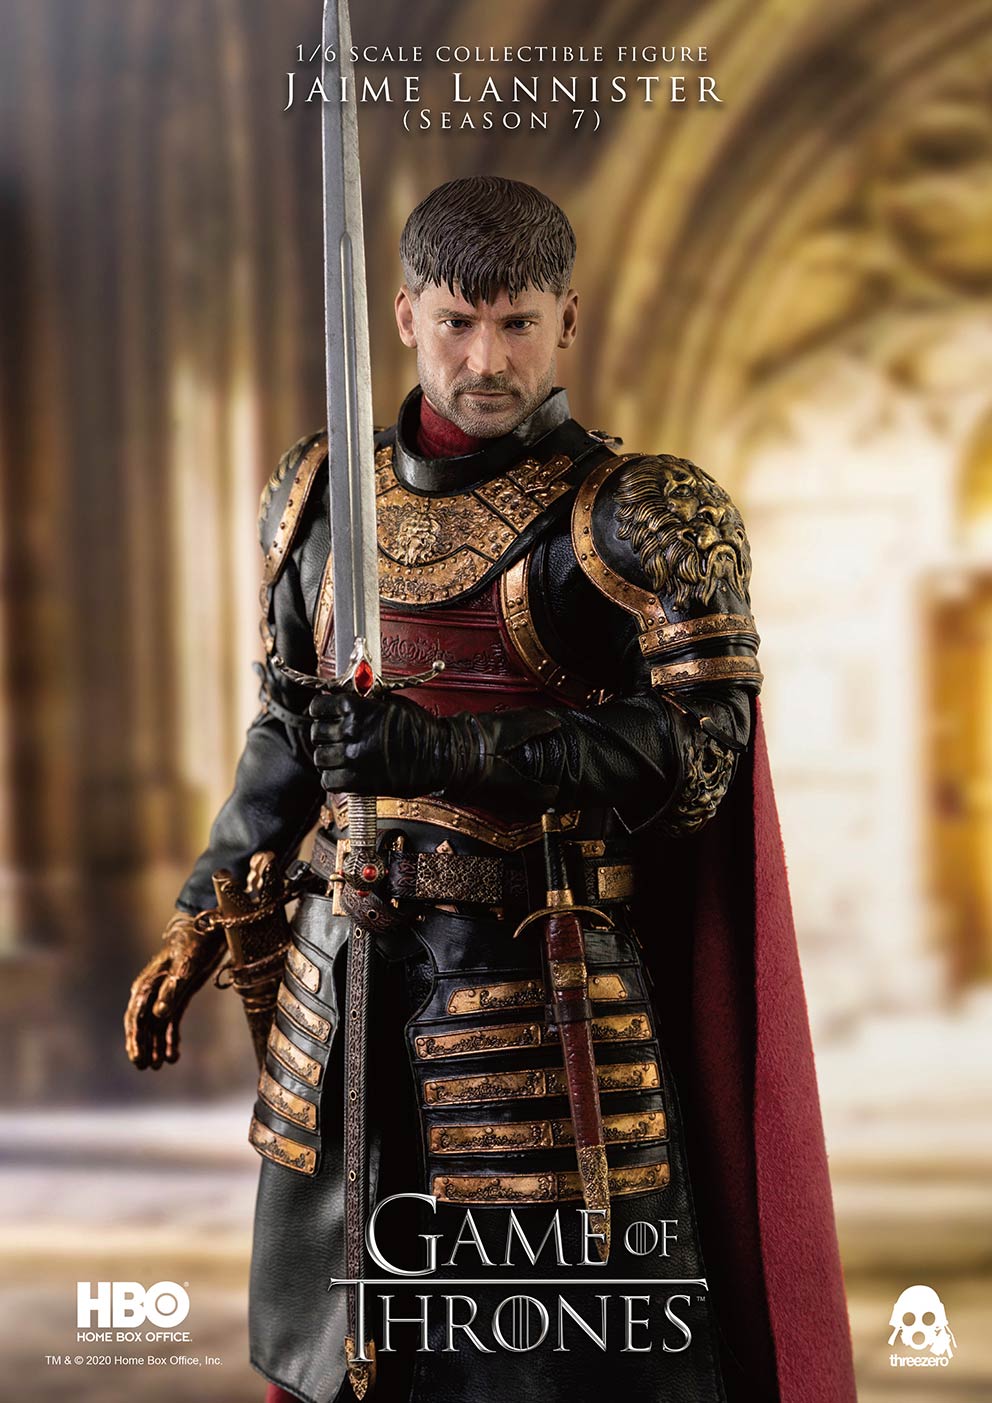 NEW PRODUCT: ThreeZero - "Game of Thrones" Season 7 - Kingslayer Jaime Lannister 0373